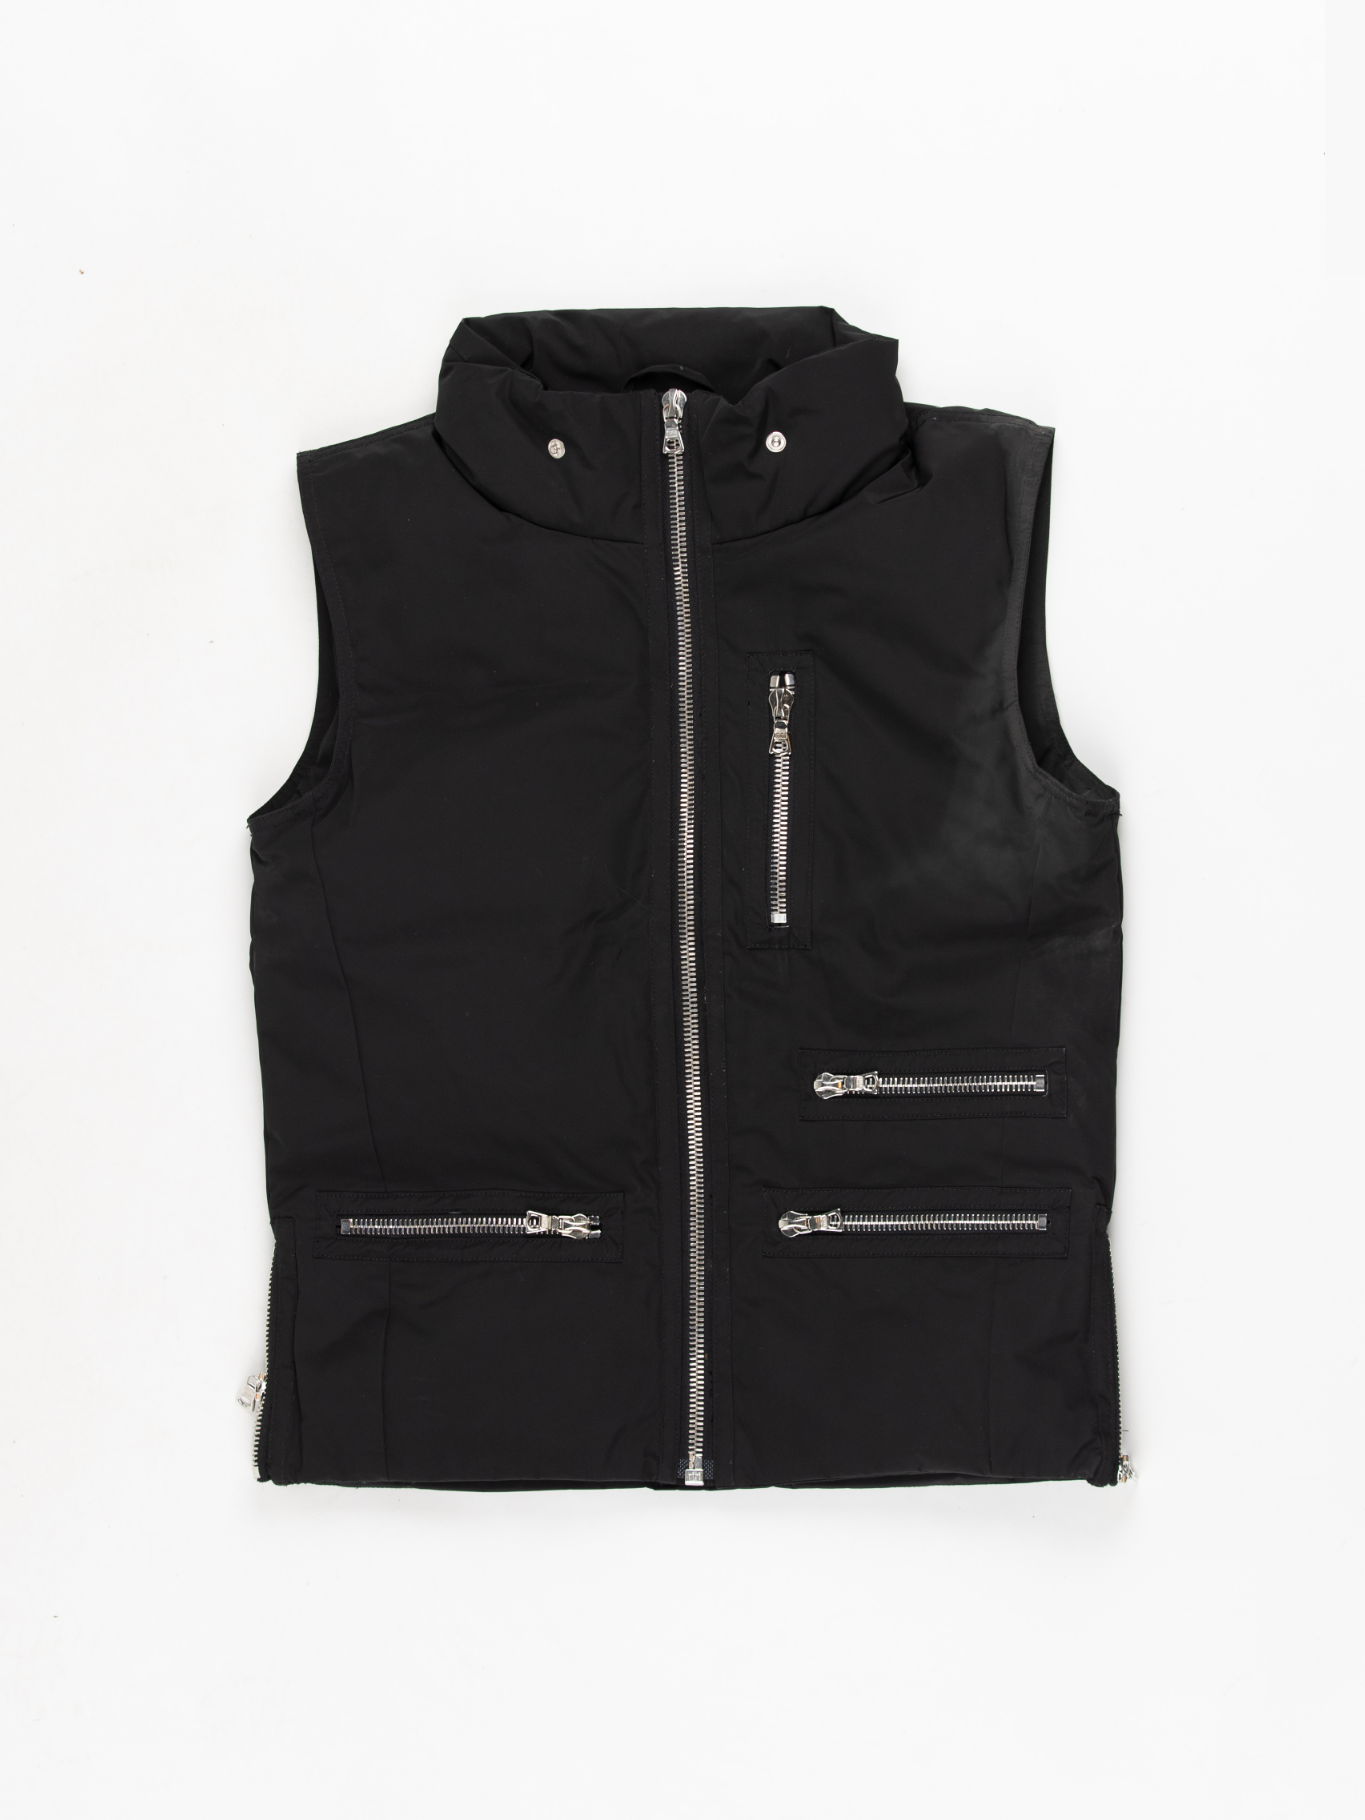 'Sample' Black Doll Vest